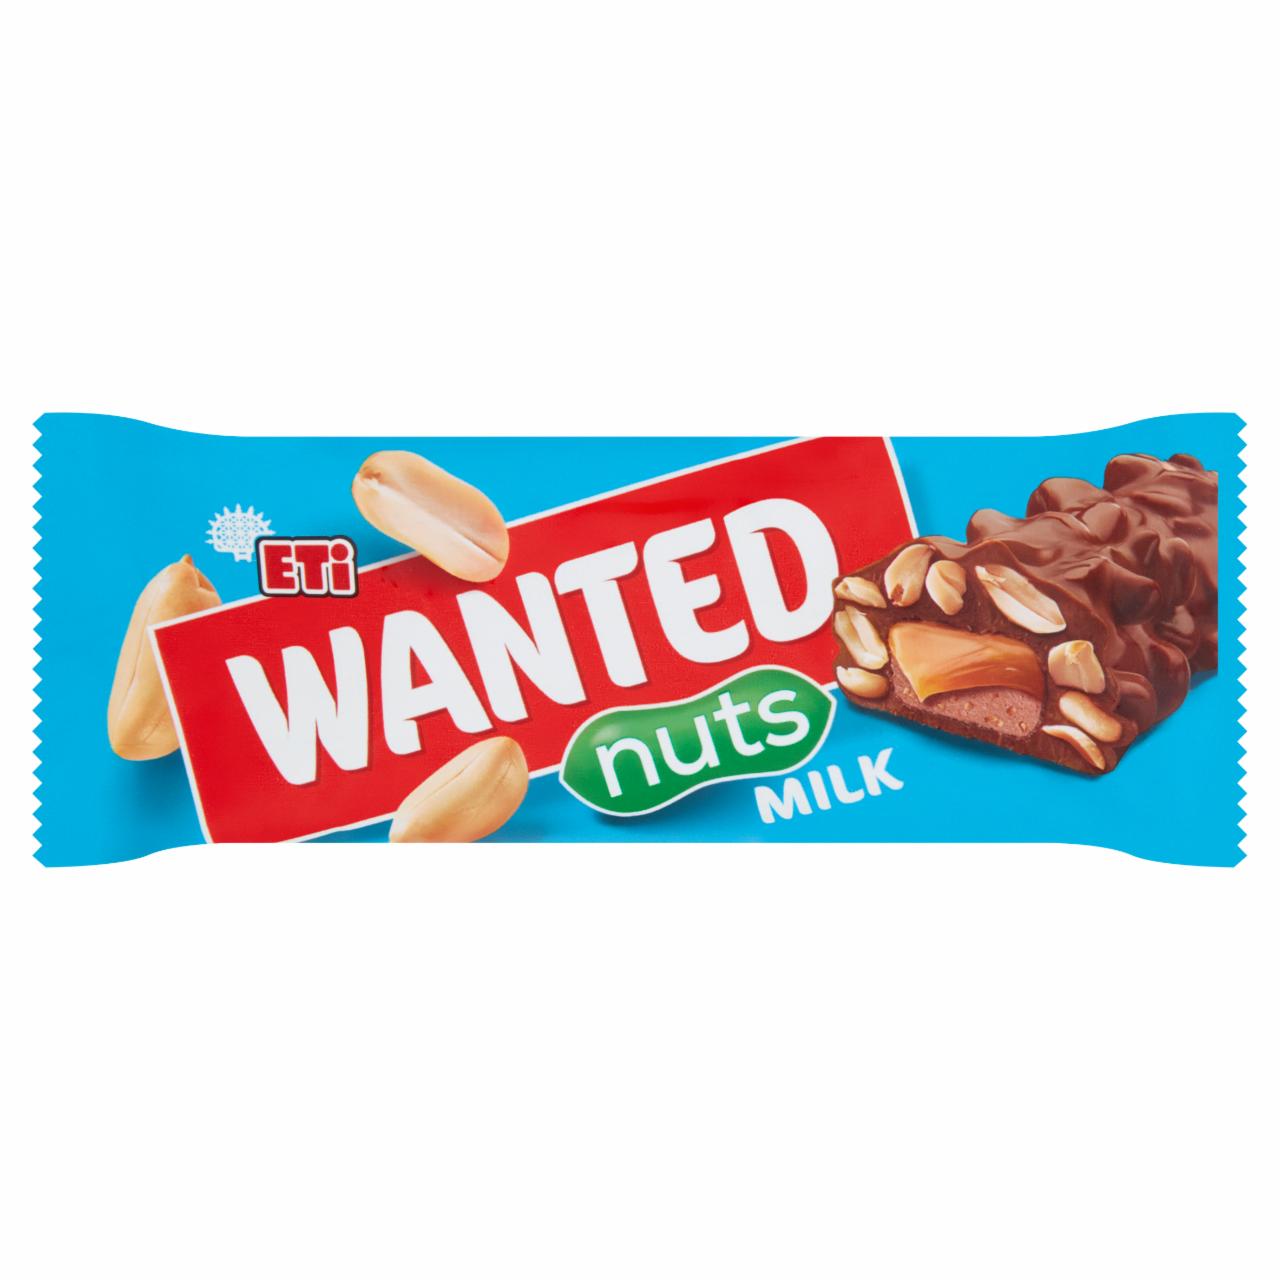 Фото - Wanted Nuts Milk Eti